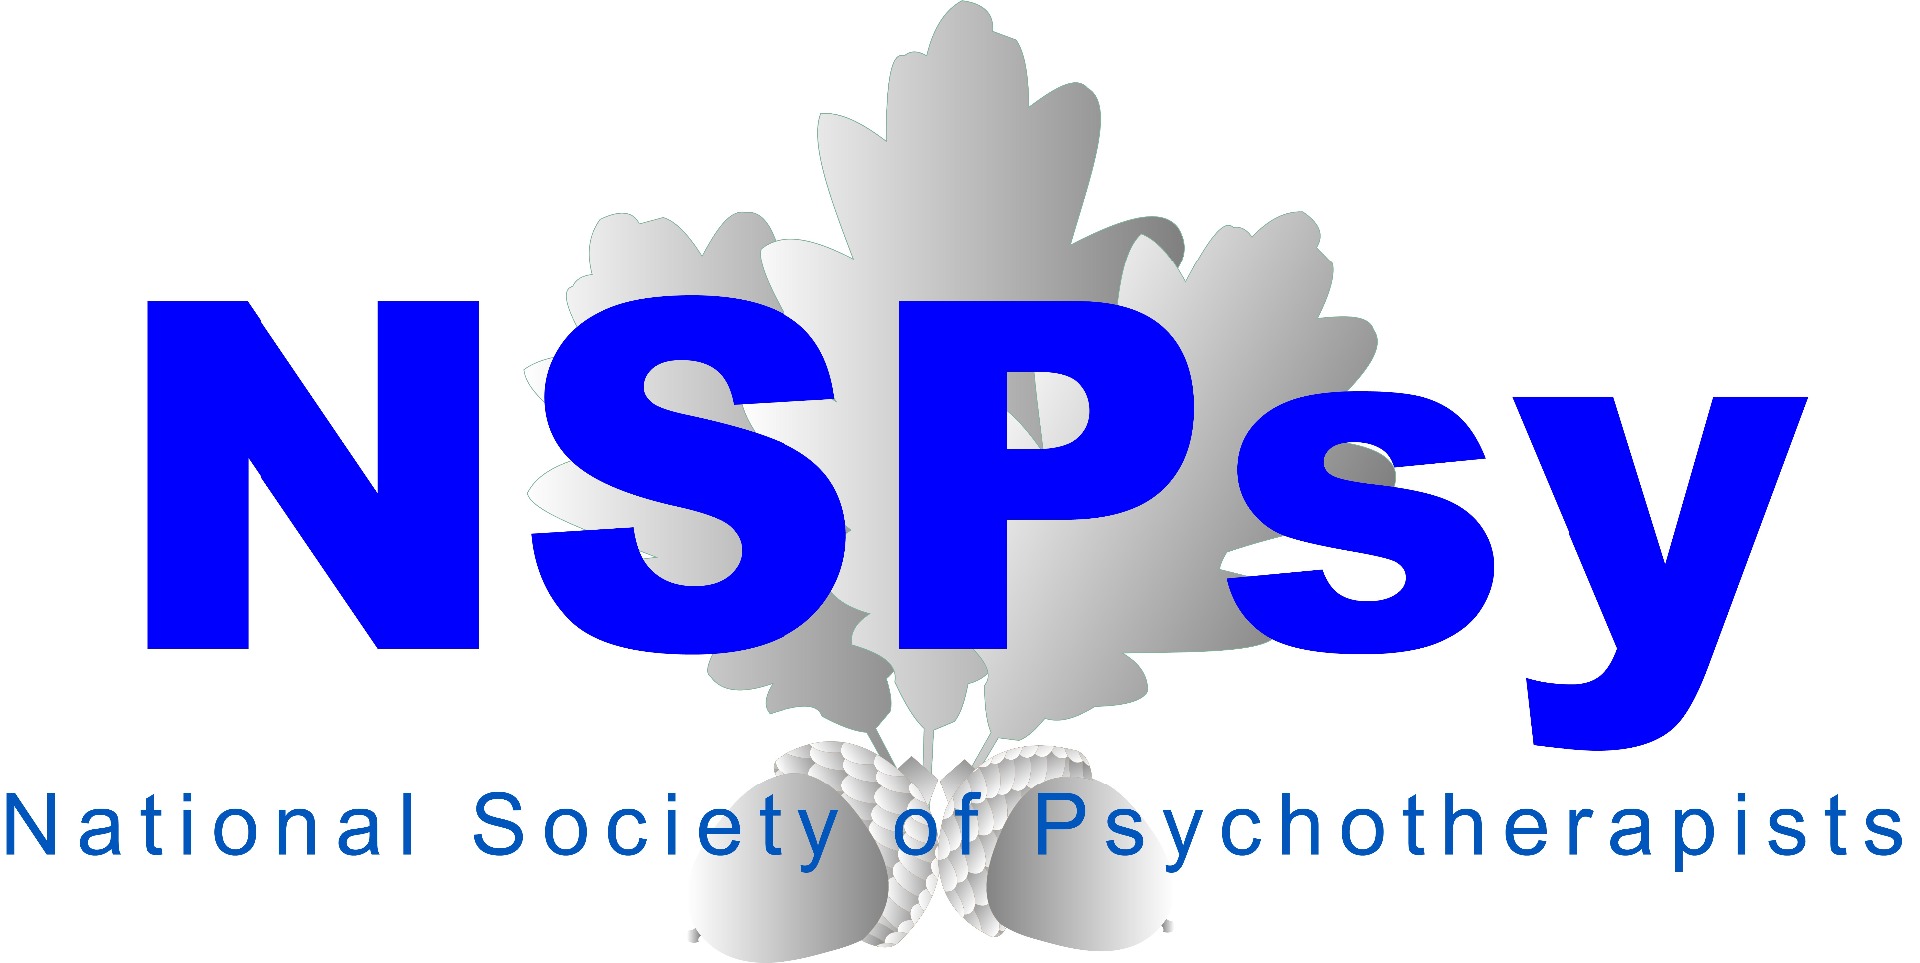 National Society of Psychotherapists